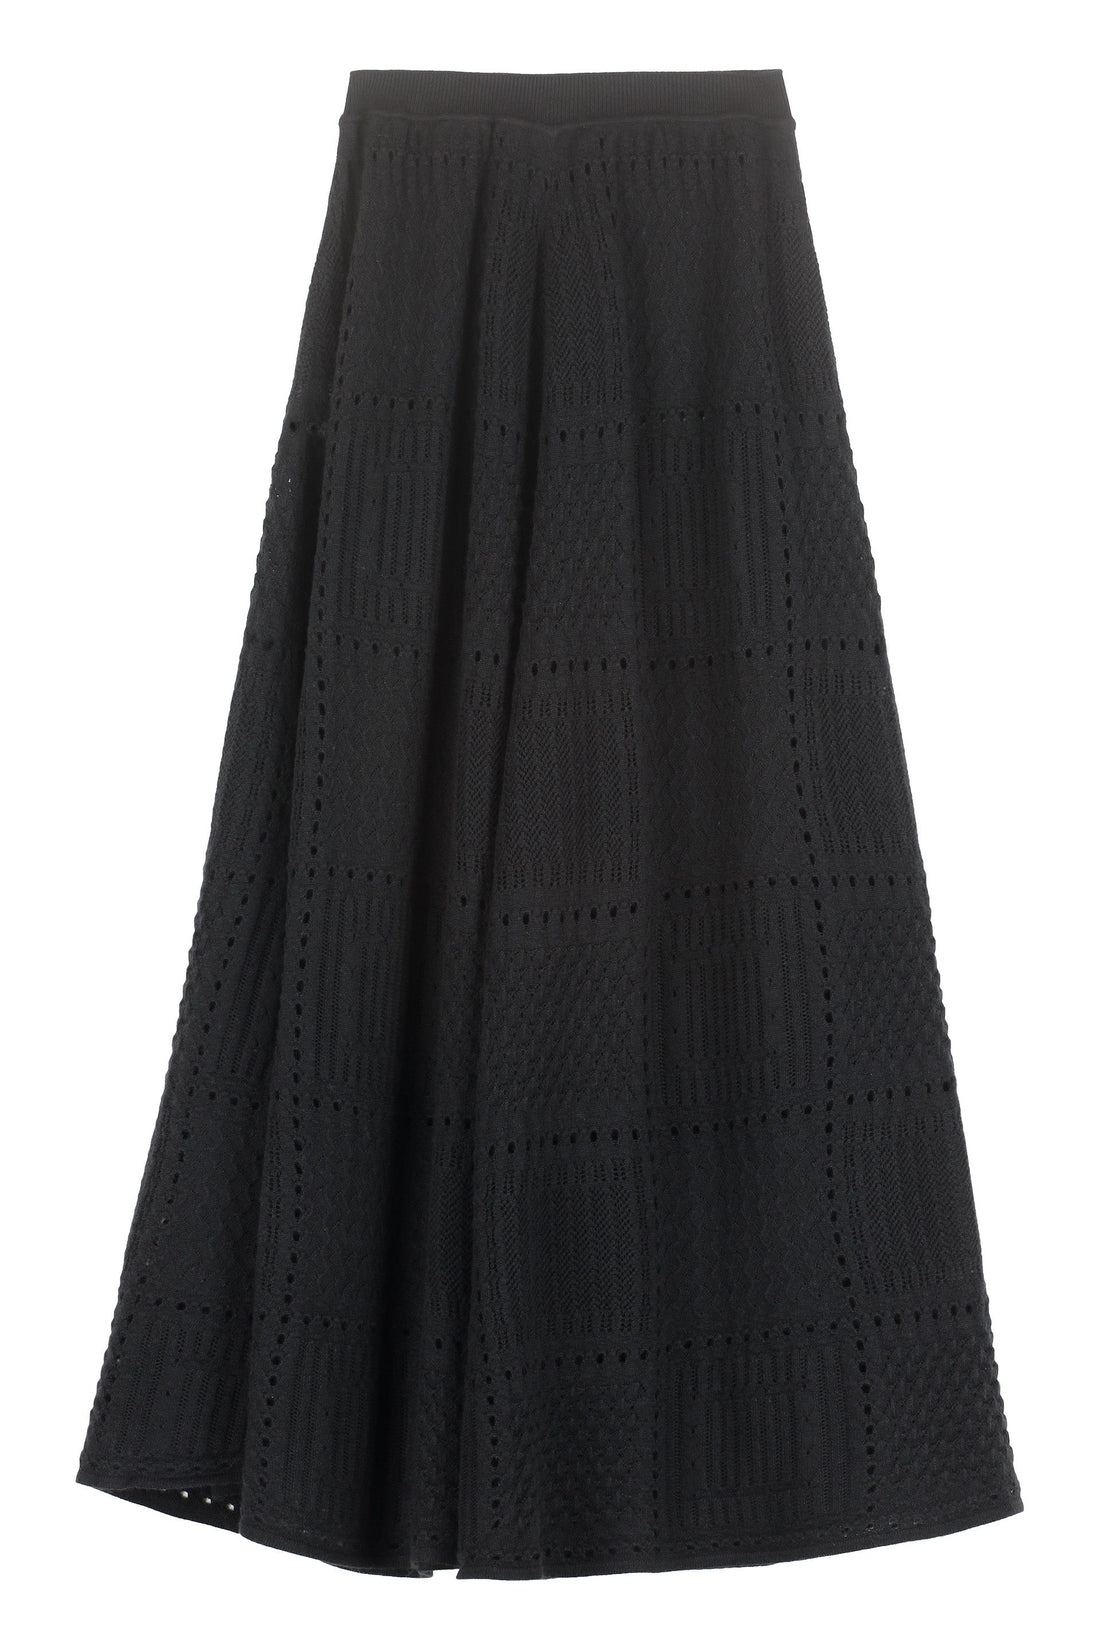 Chloé-OUTLET-SALE-Openwork-knit skirt-ARCHIVIST